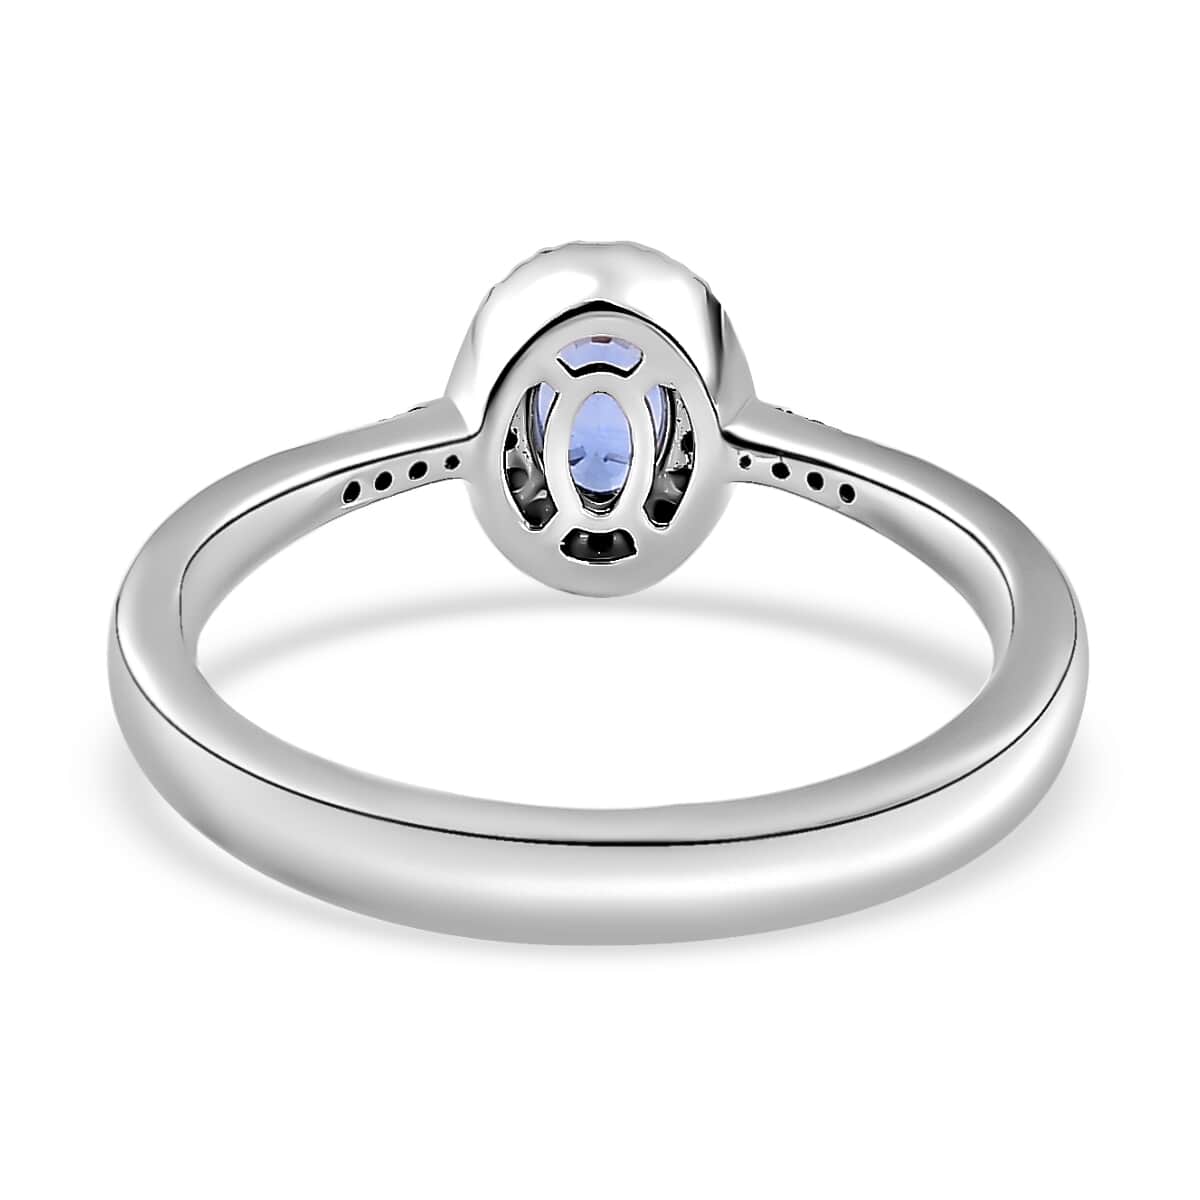 Luxoro 10K White Gold Premium Ceylon Blue Sapphire and G-H I3 Diamond Ring (Size 6.0) 1.15 ctw image number 4